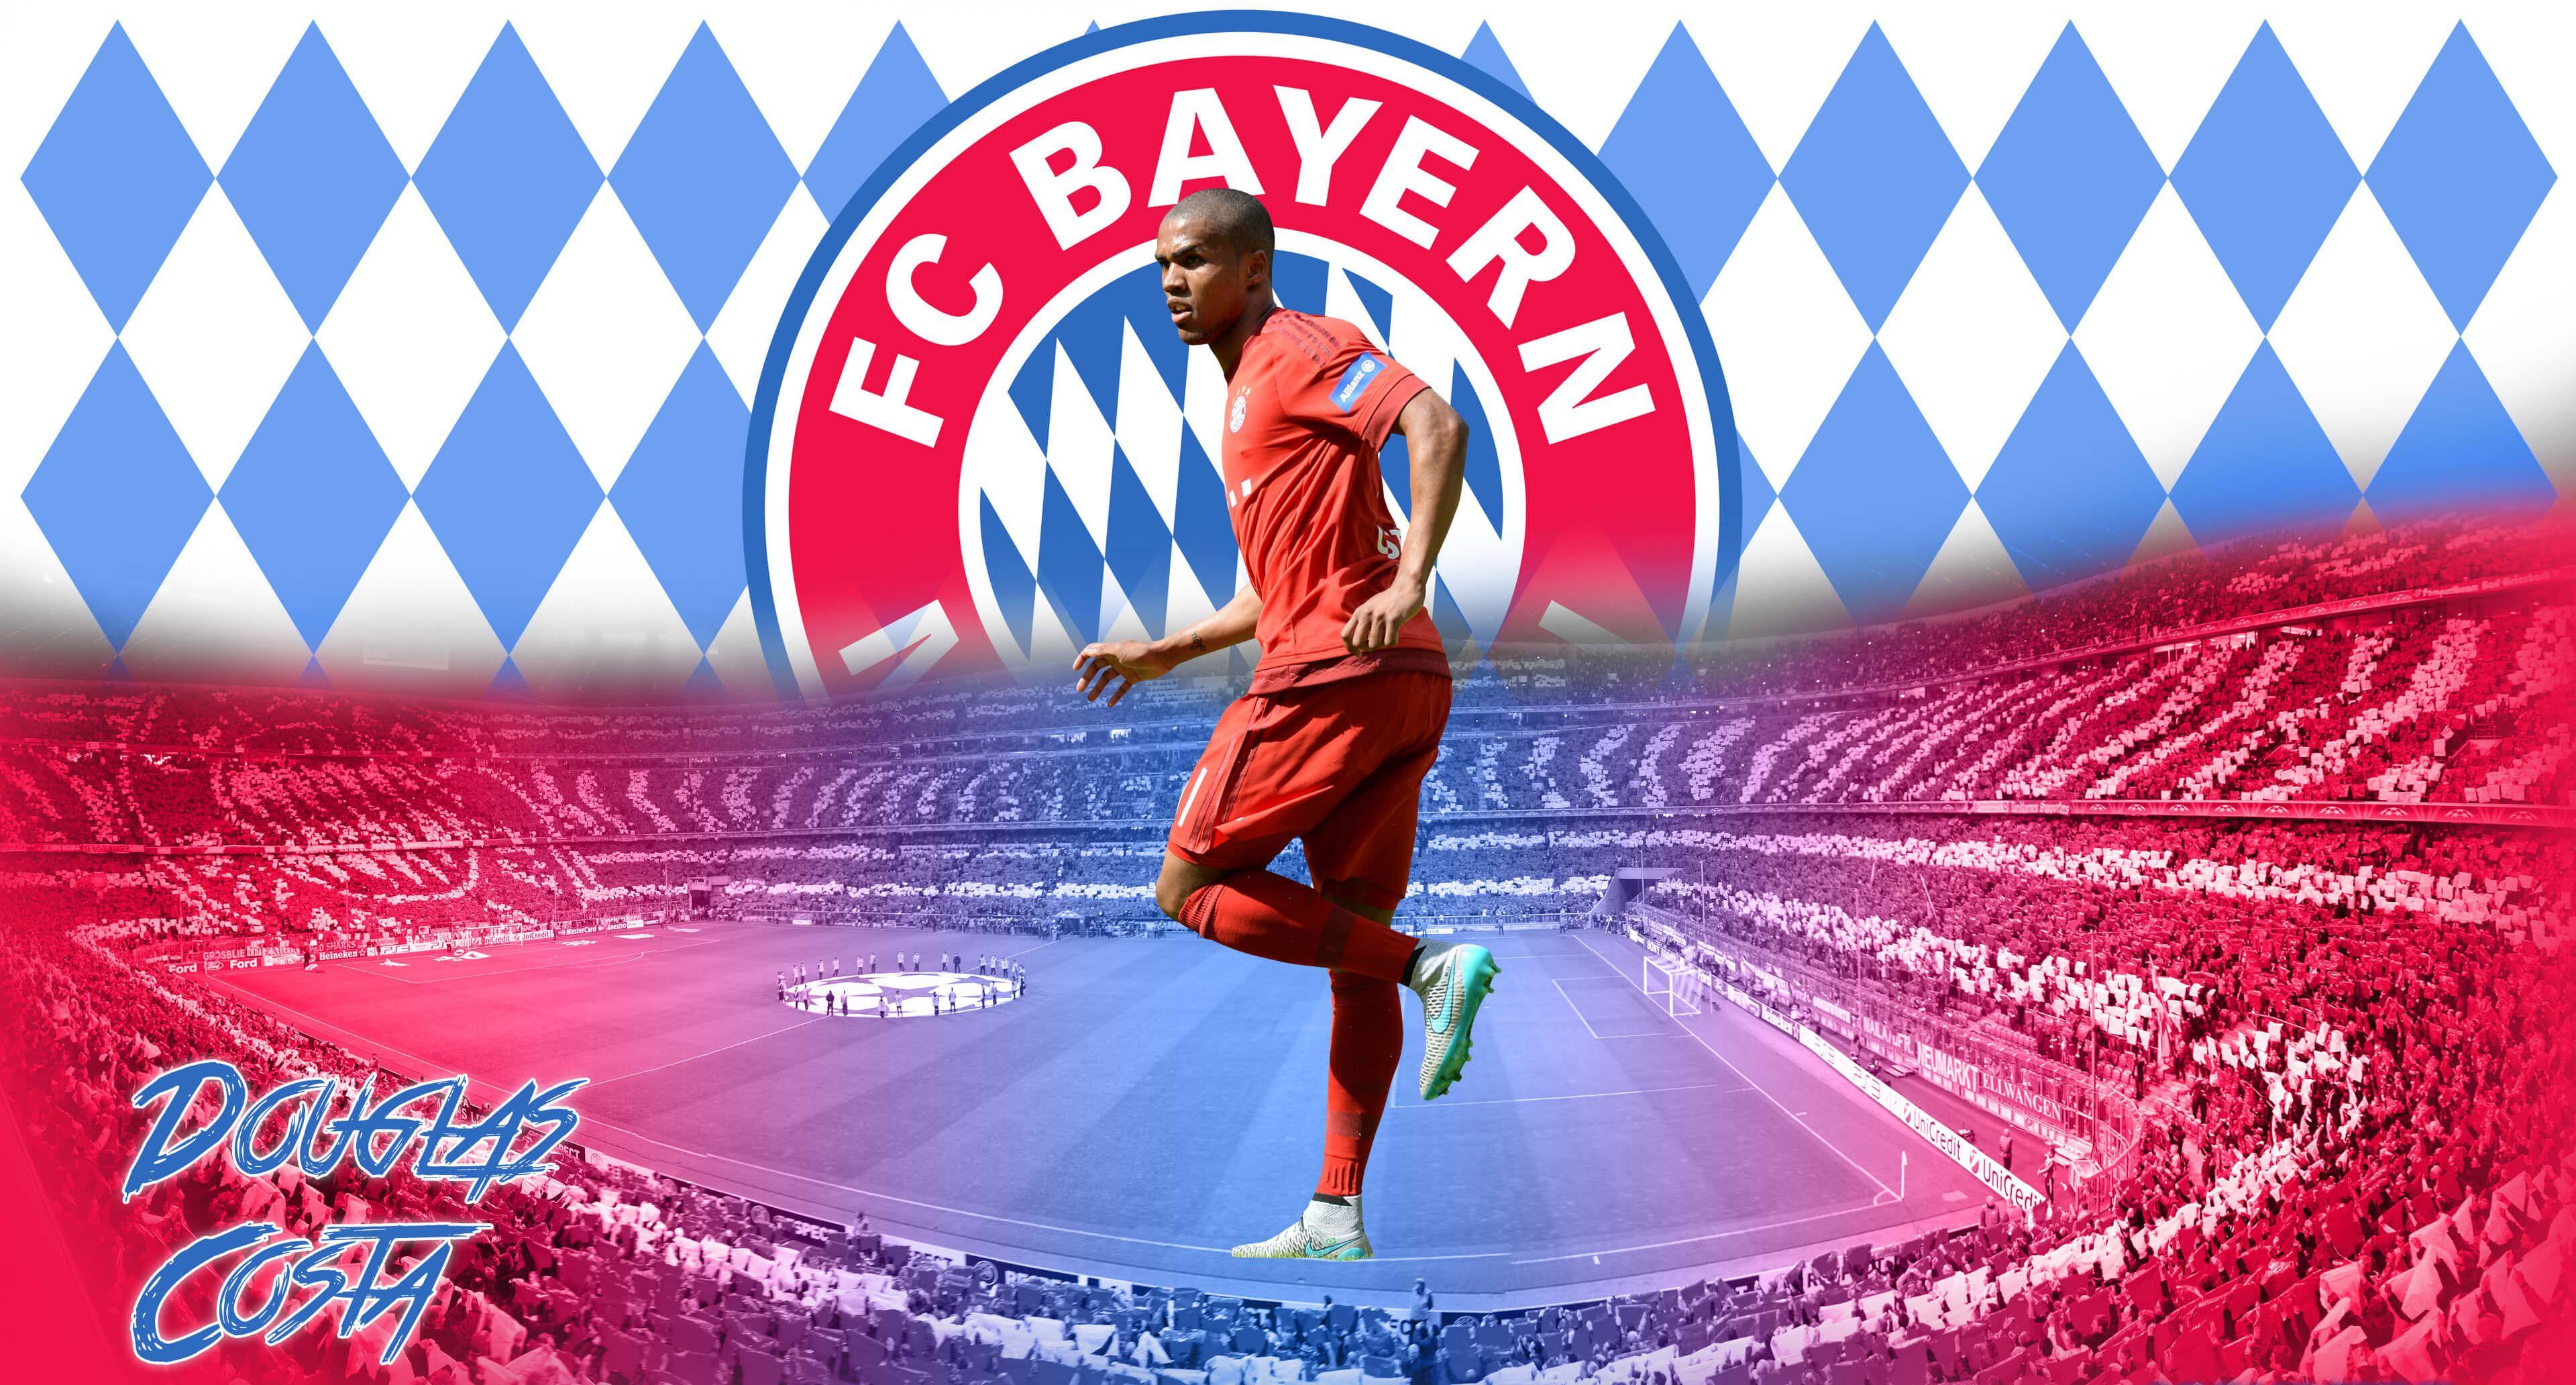 Wallpaper.wiki Douglas Costa FC Bayern Munchen Wallpaper PIC